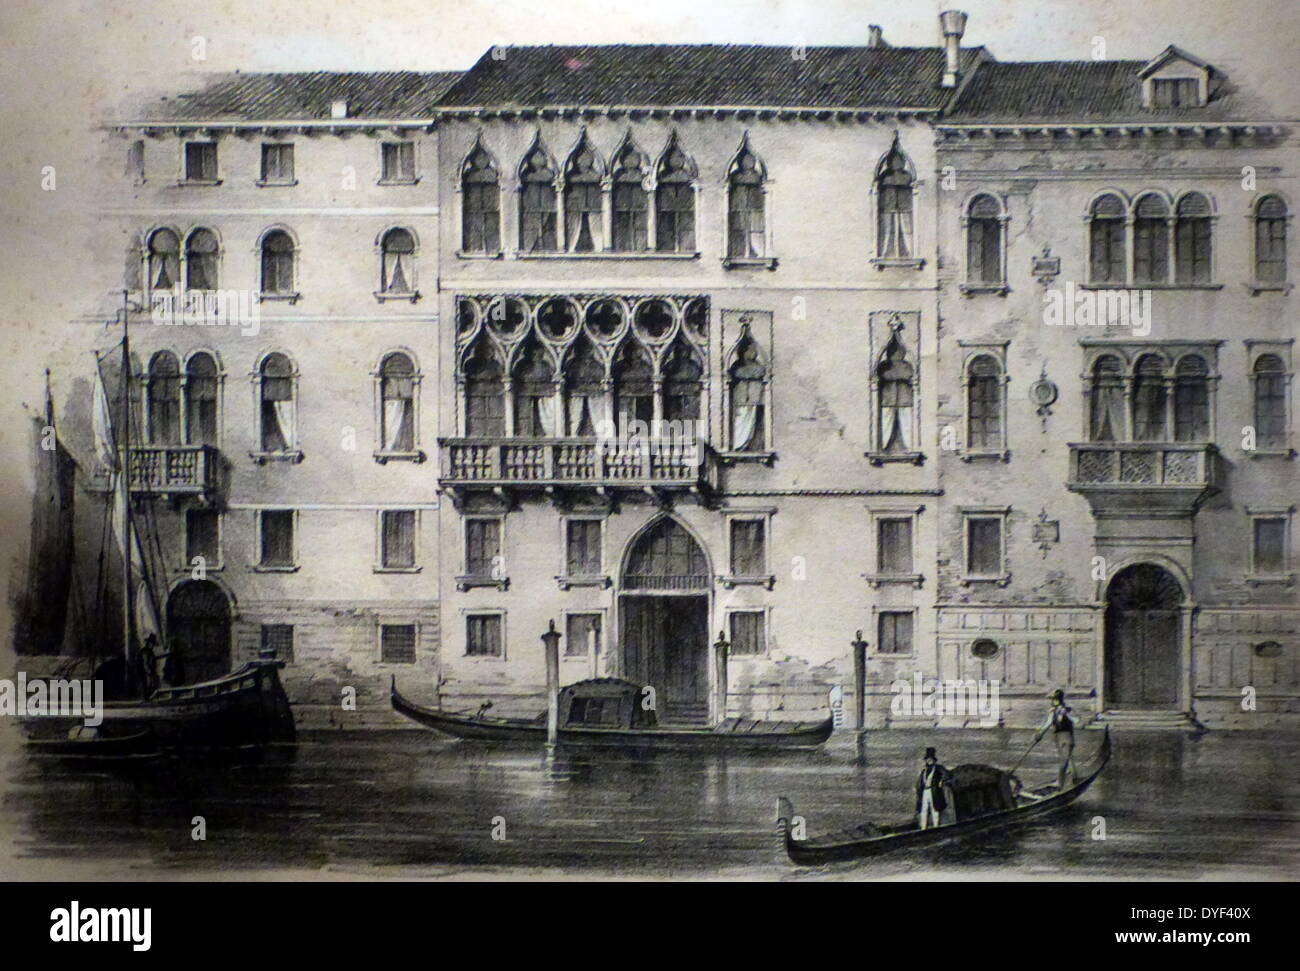 Illustration of the Palazzo Erizzo. Stock Photo